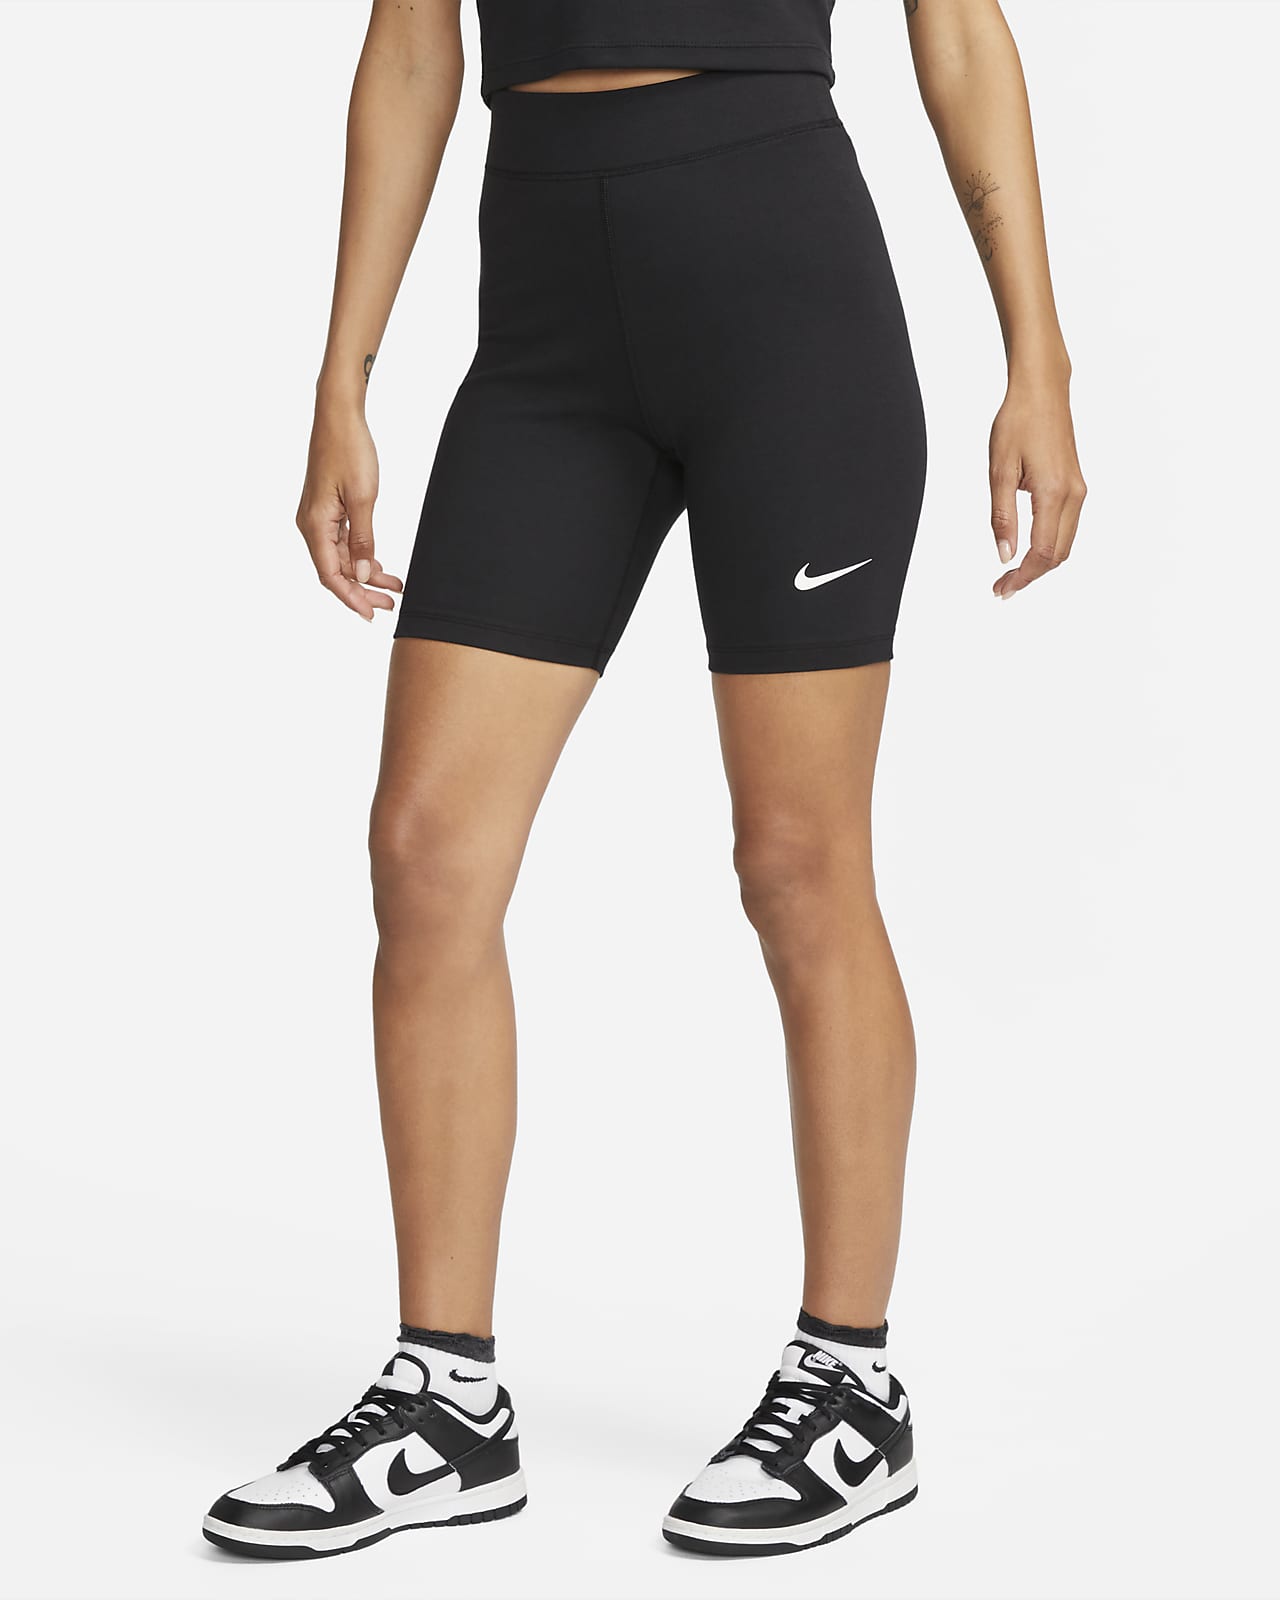 Nike Sportswear Classic-cykelshorts med høj talje (20 cm) til kvinder